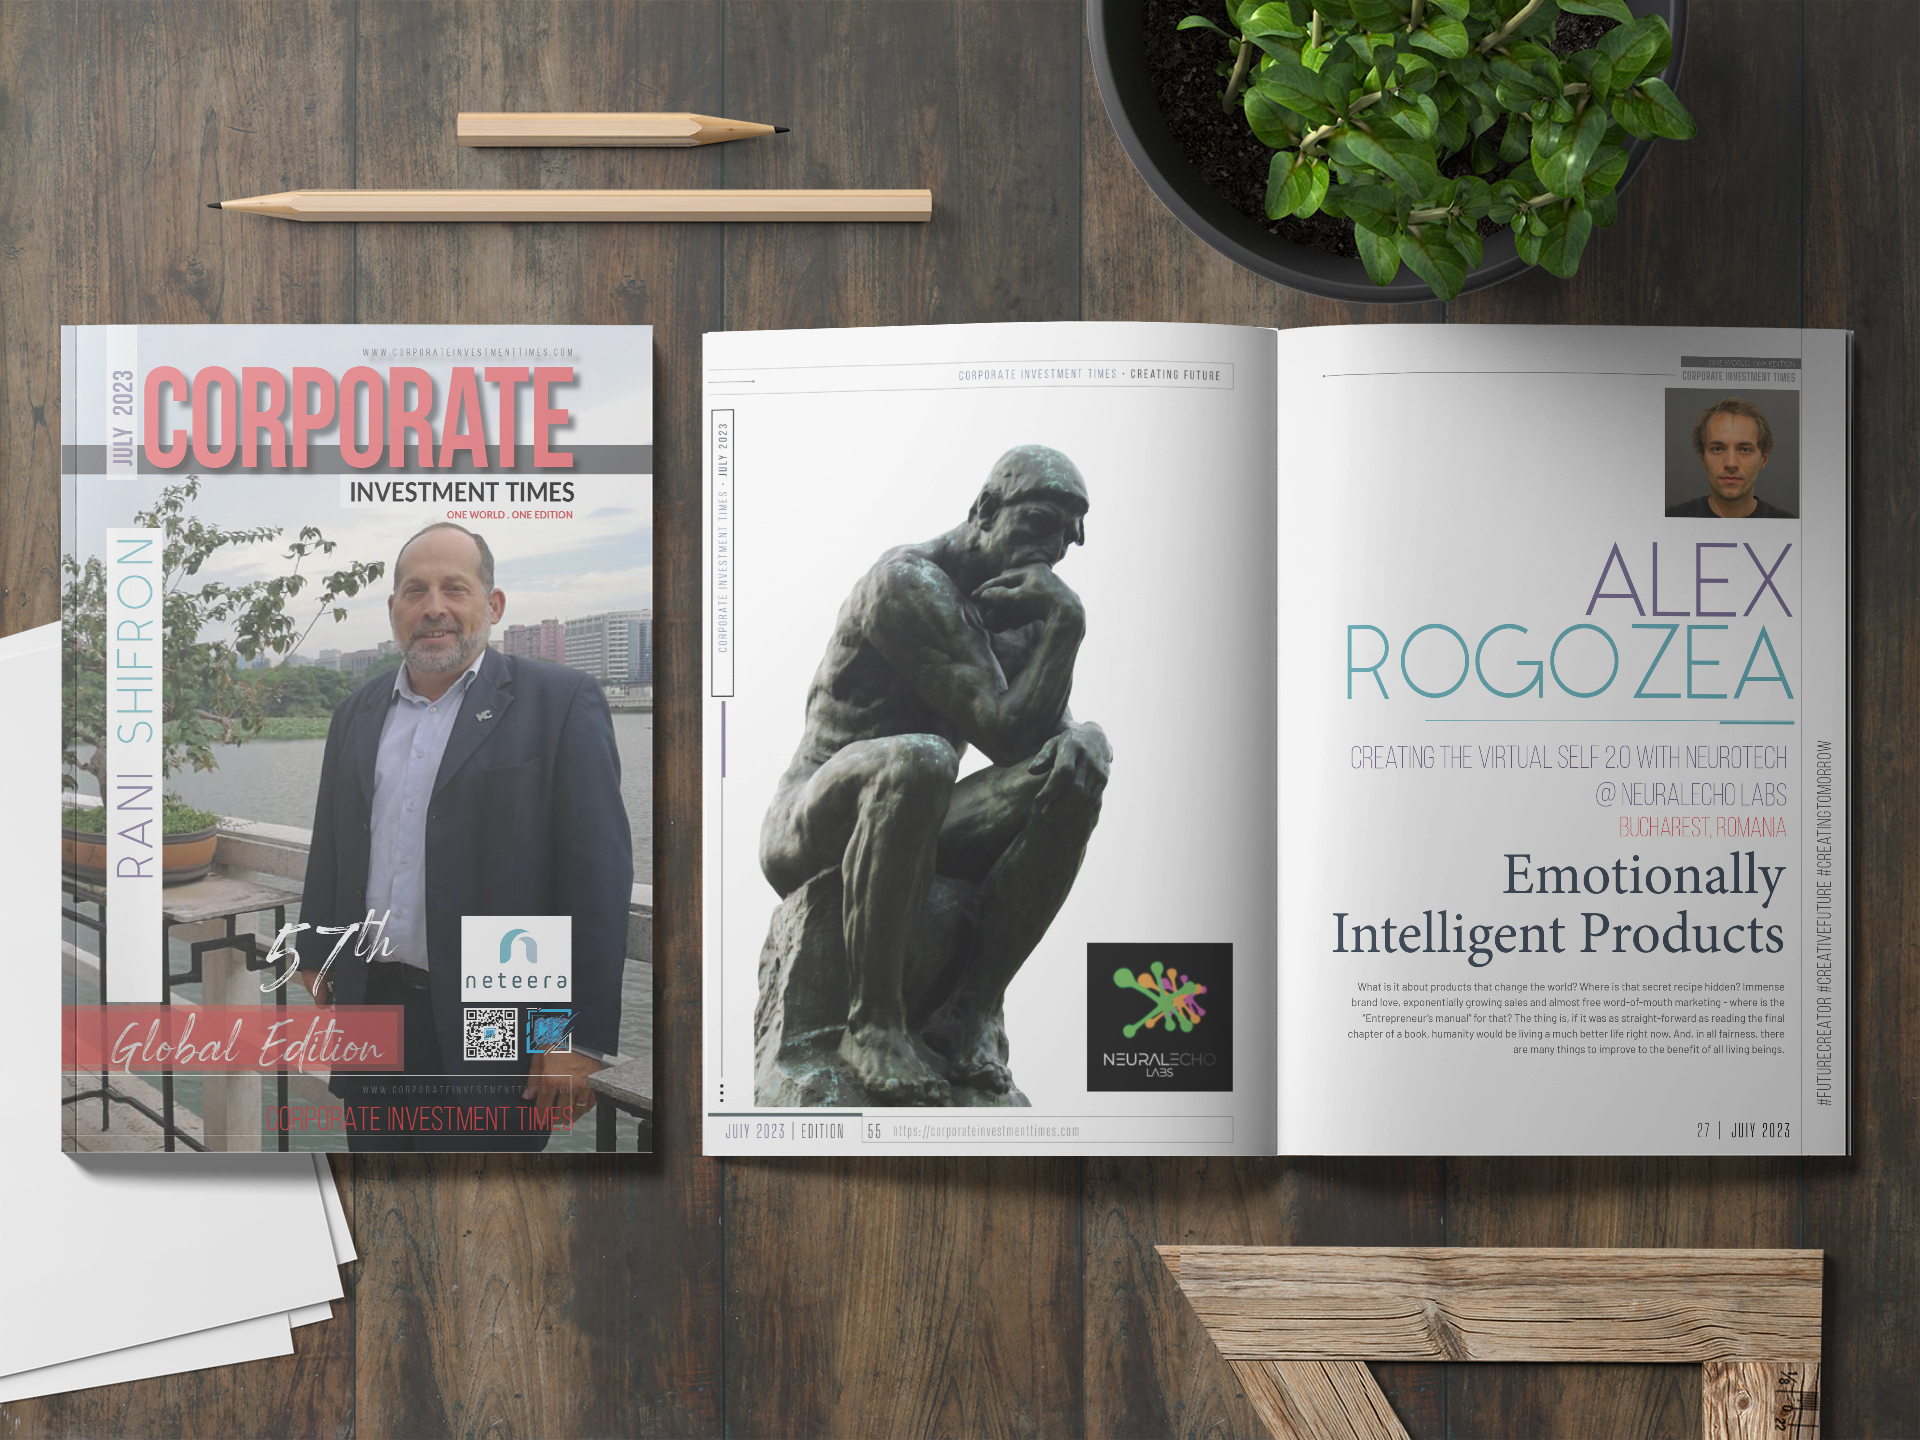 Emotionally Intelligent Products - by Alex Rogozea